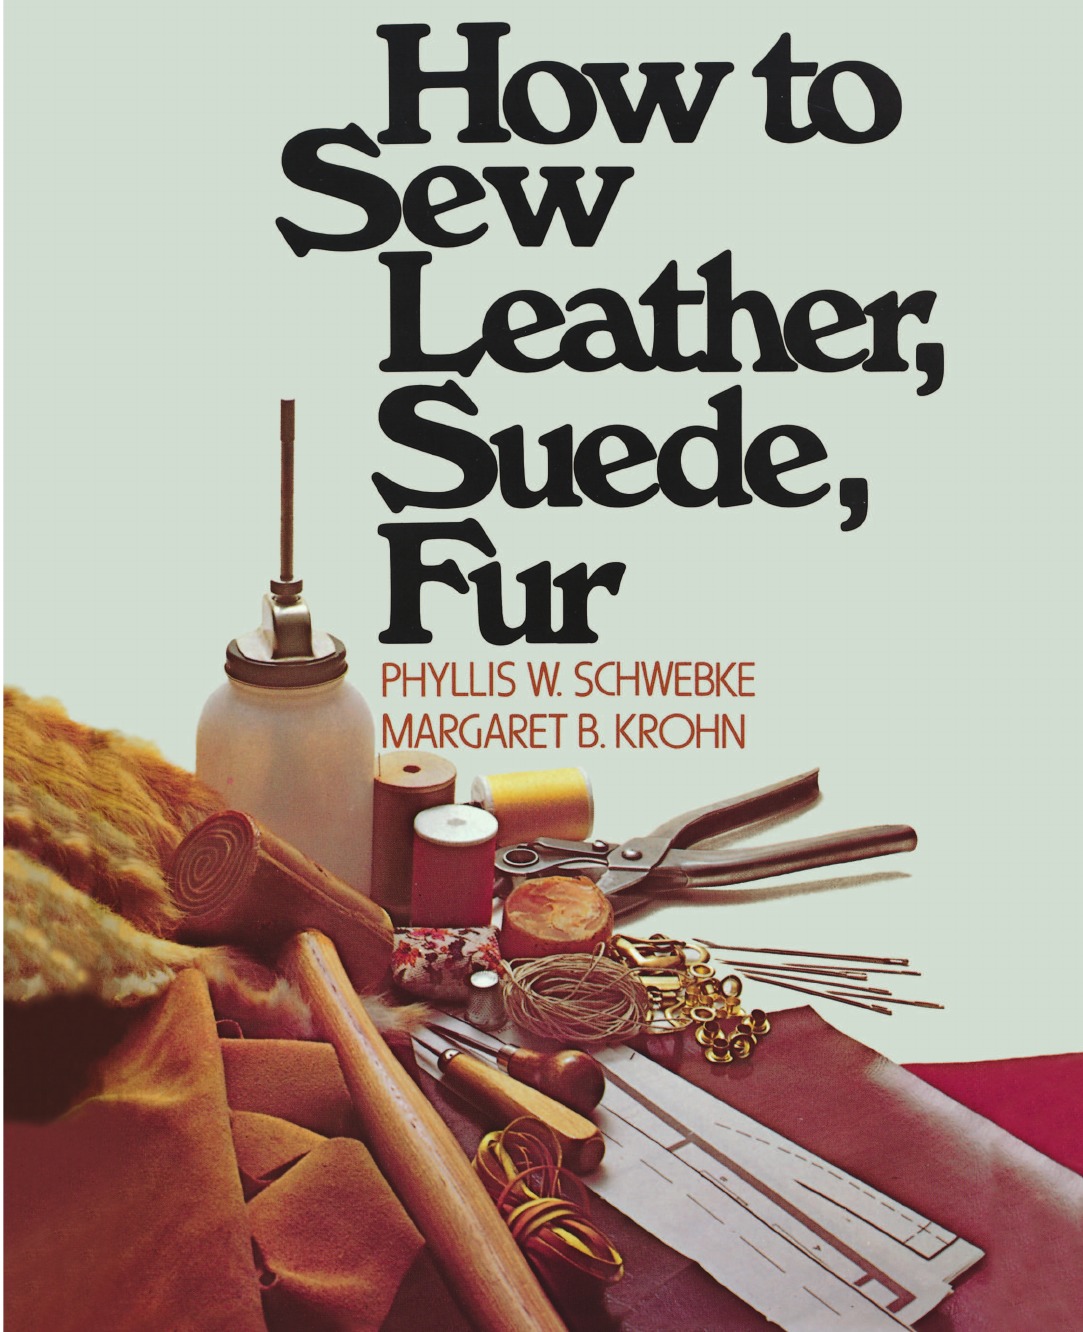 Phyllis W. Schwebke, Margaret B. Krohn How to Sew Leather, Suede, Fur